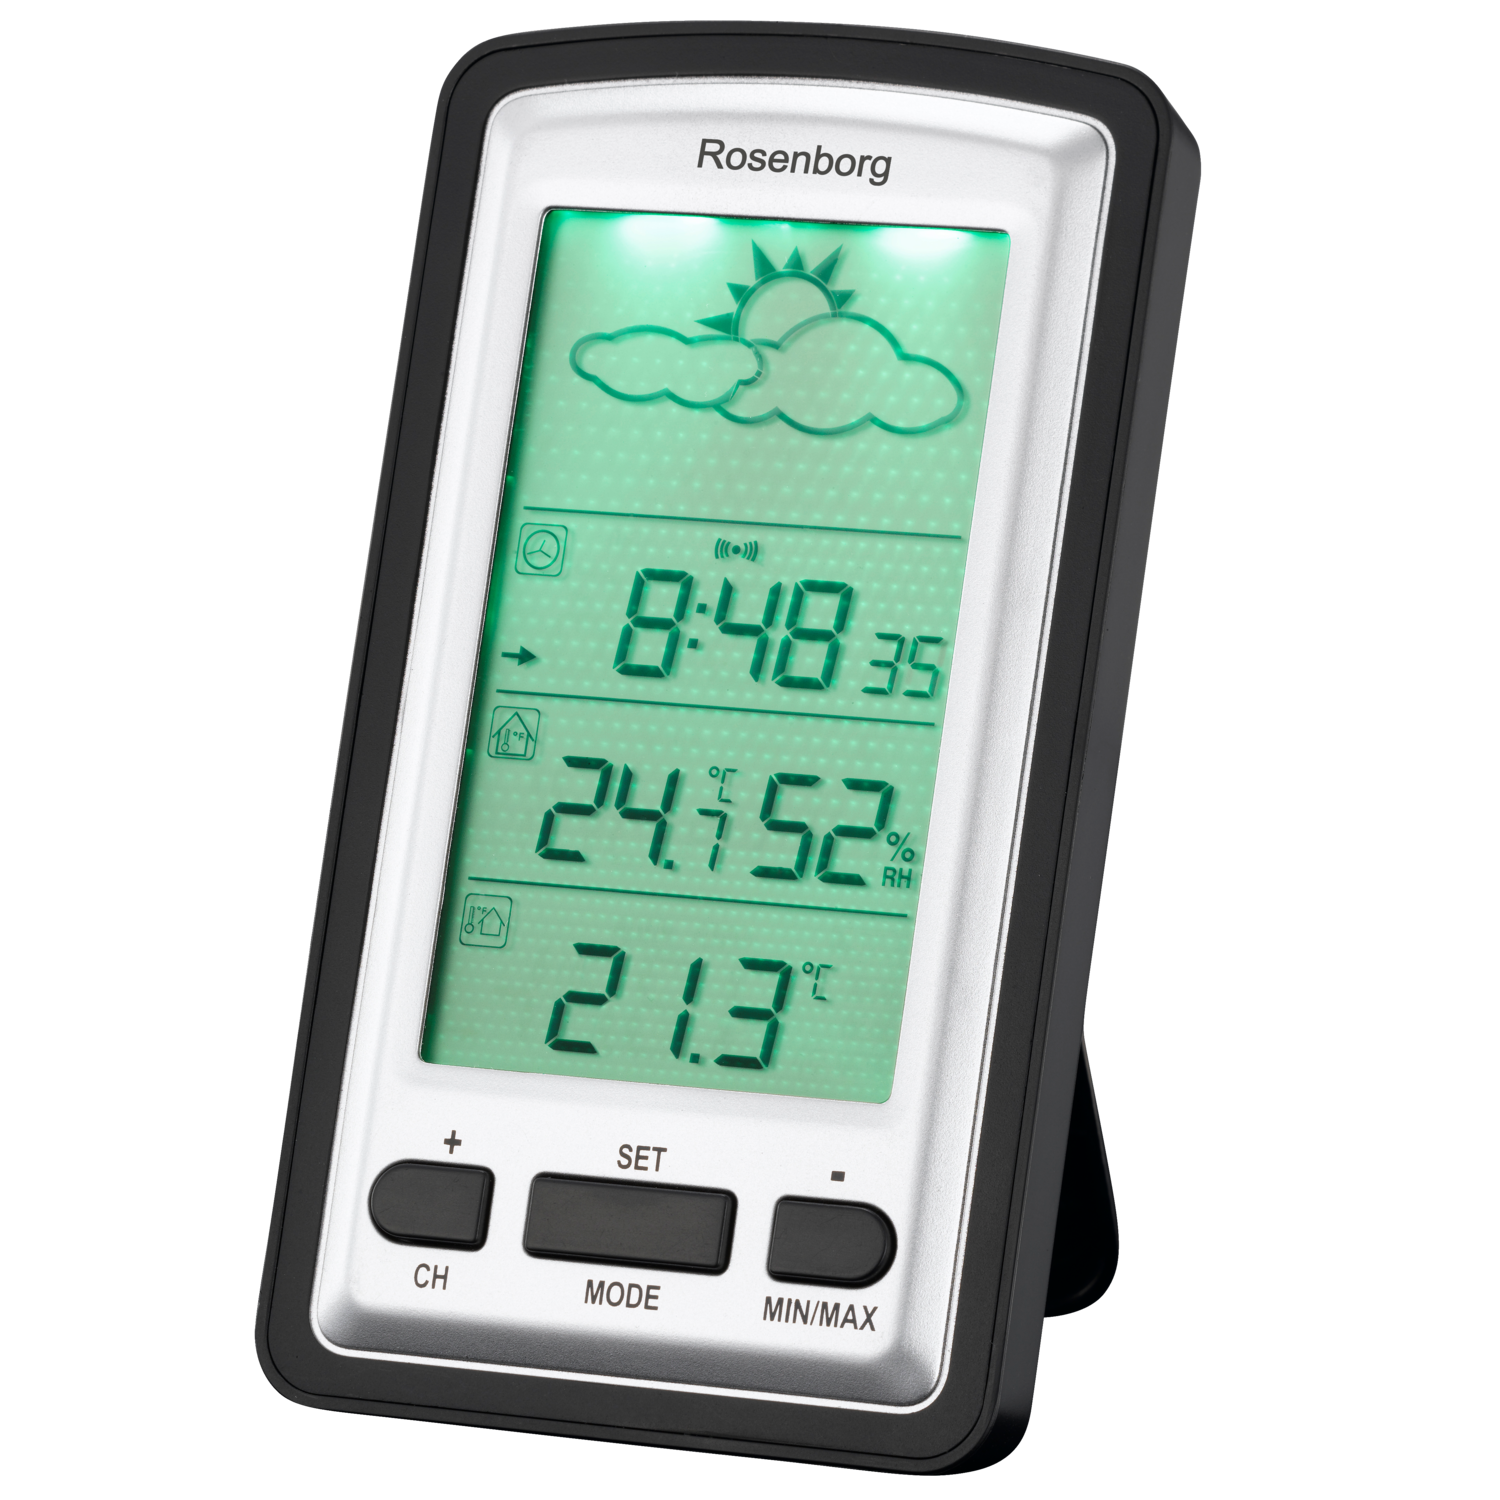 Alternativt forslag skuespillerinde Waterfront Rosenborg WS1280 trådløs vejrstation med baro- og termometer